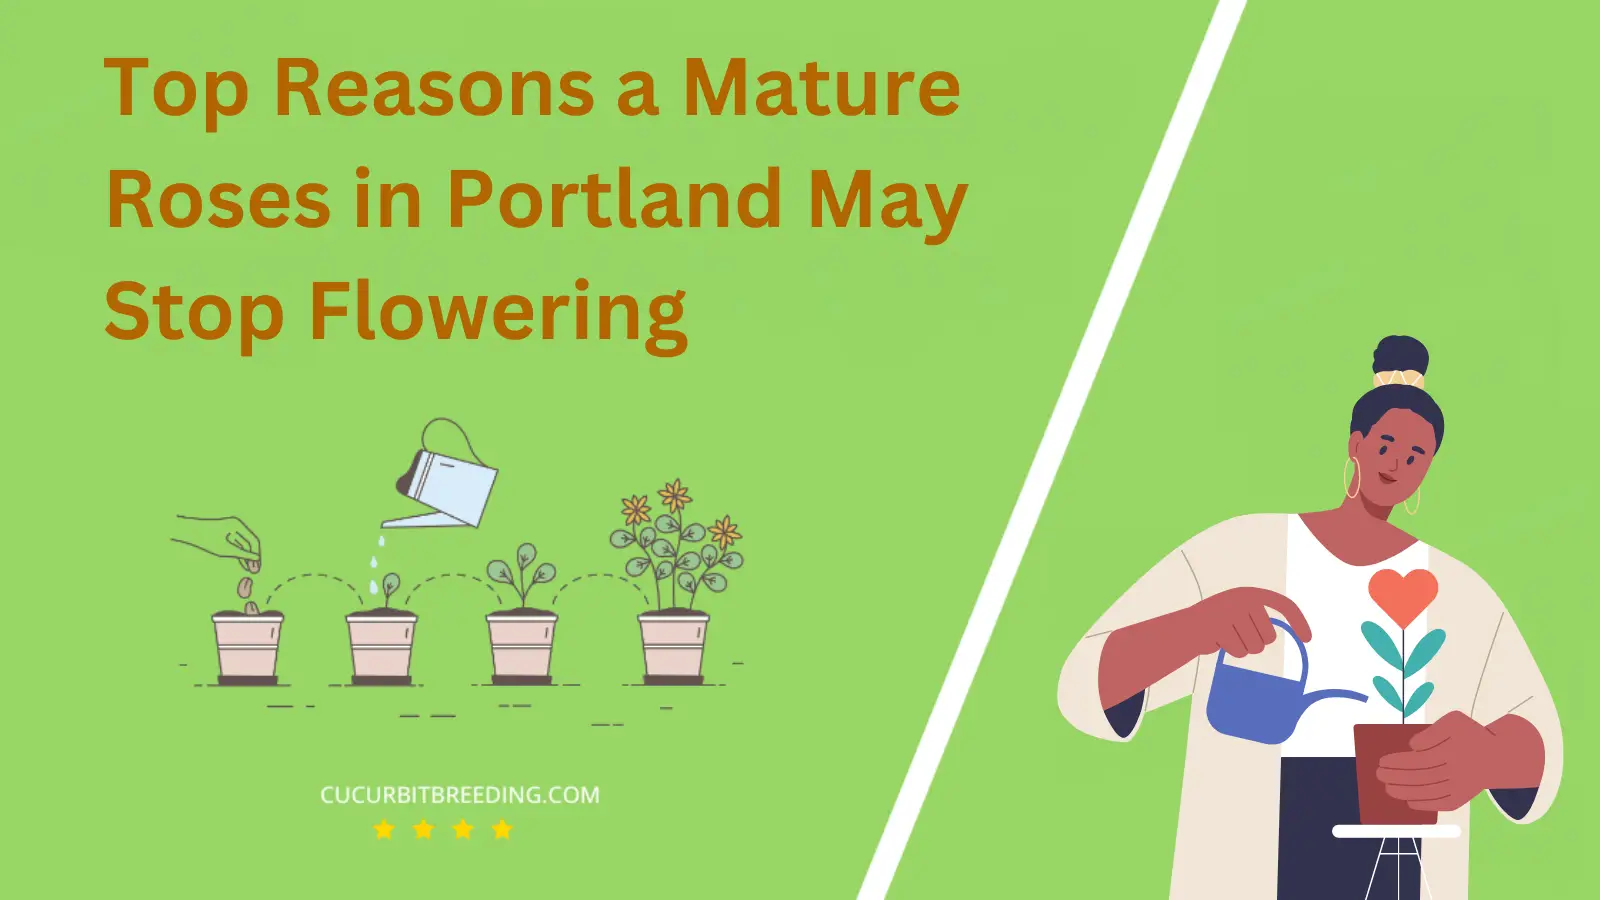 Top Reasons a Mature Roses in Portland May Stop Flowering